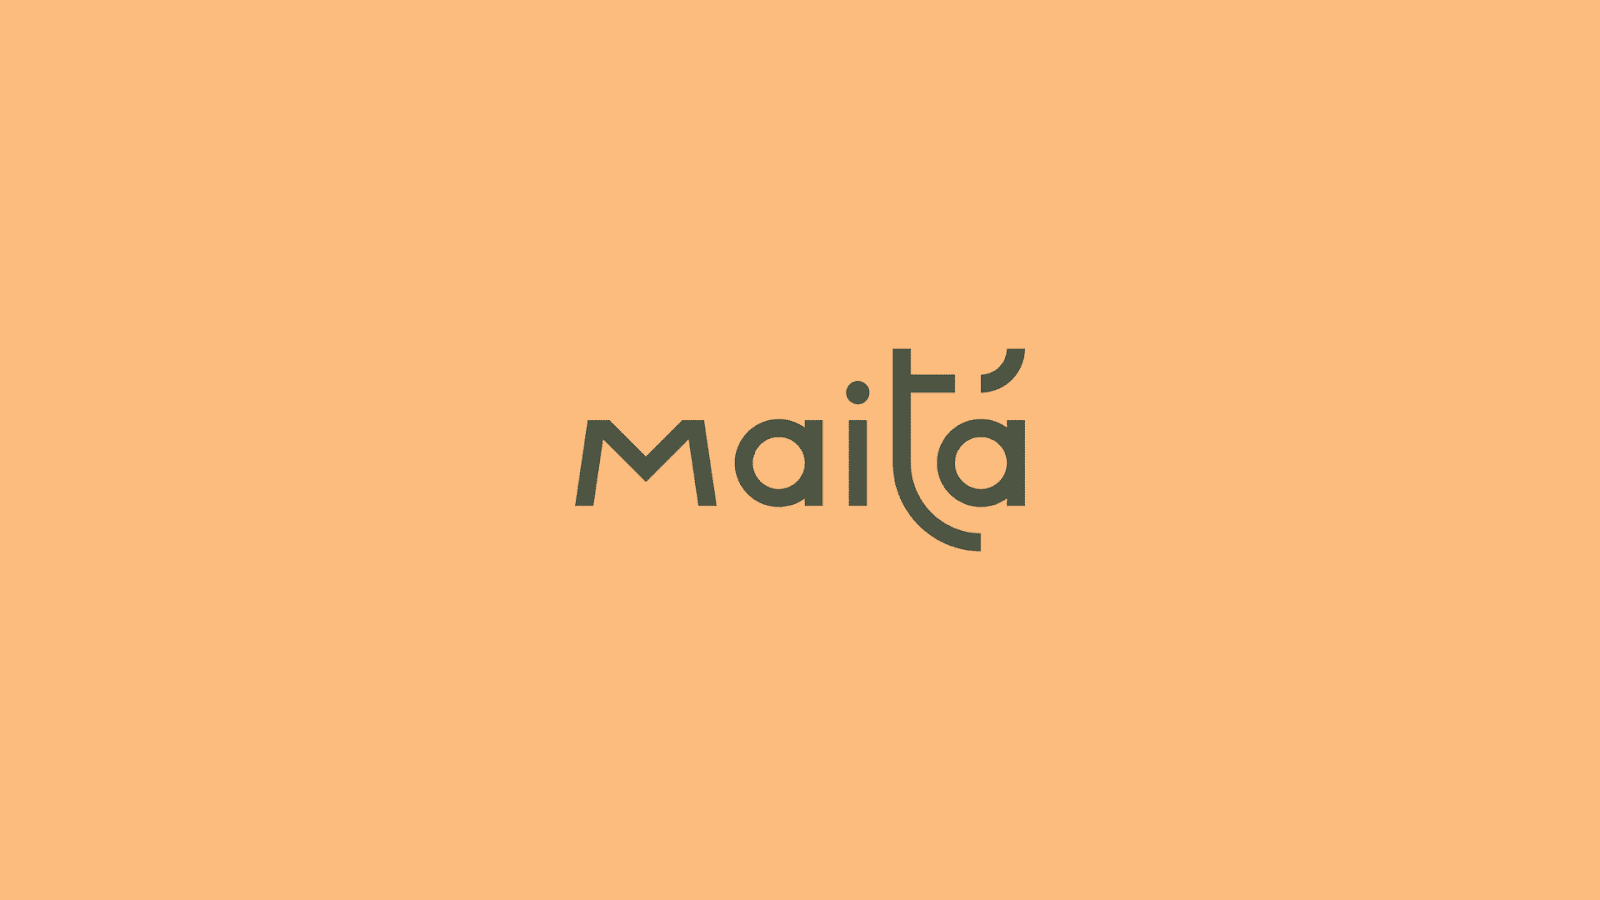 Branding and visual identity artifacts for Maita cosmetics